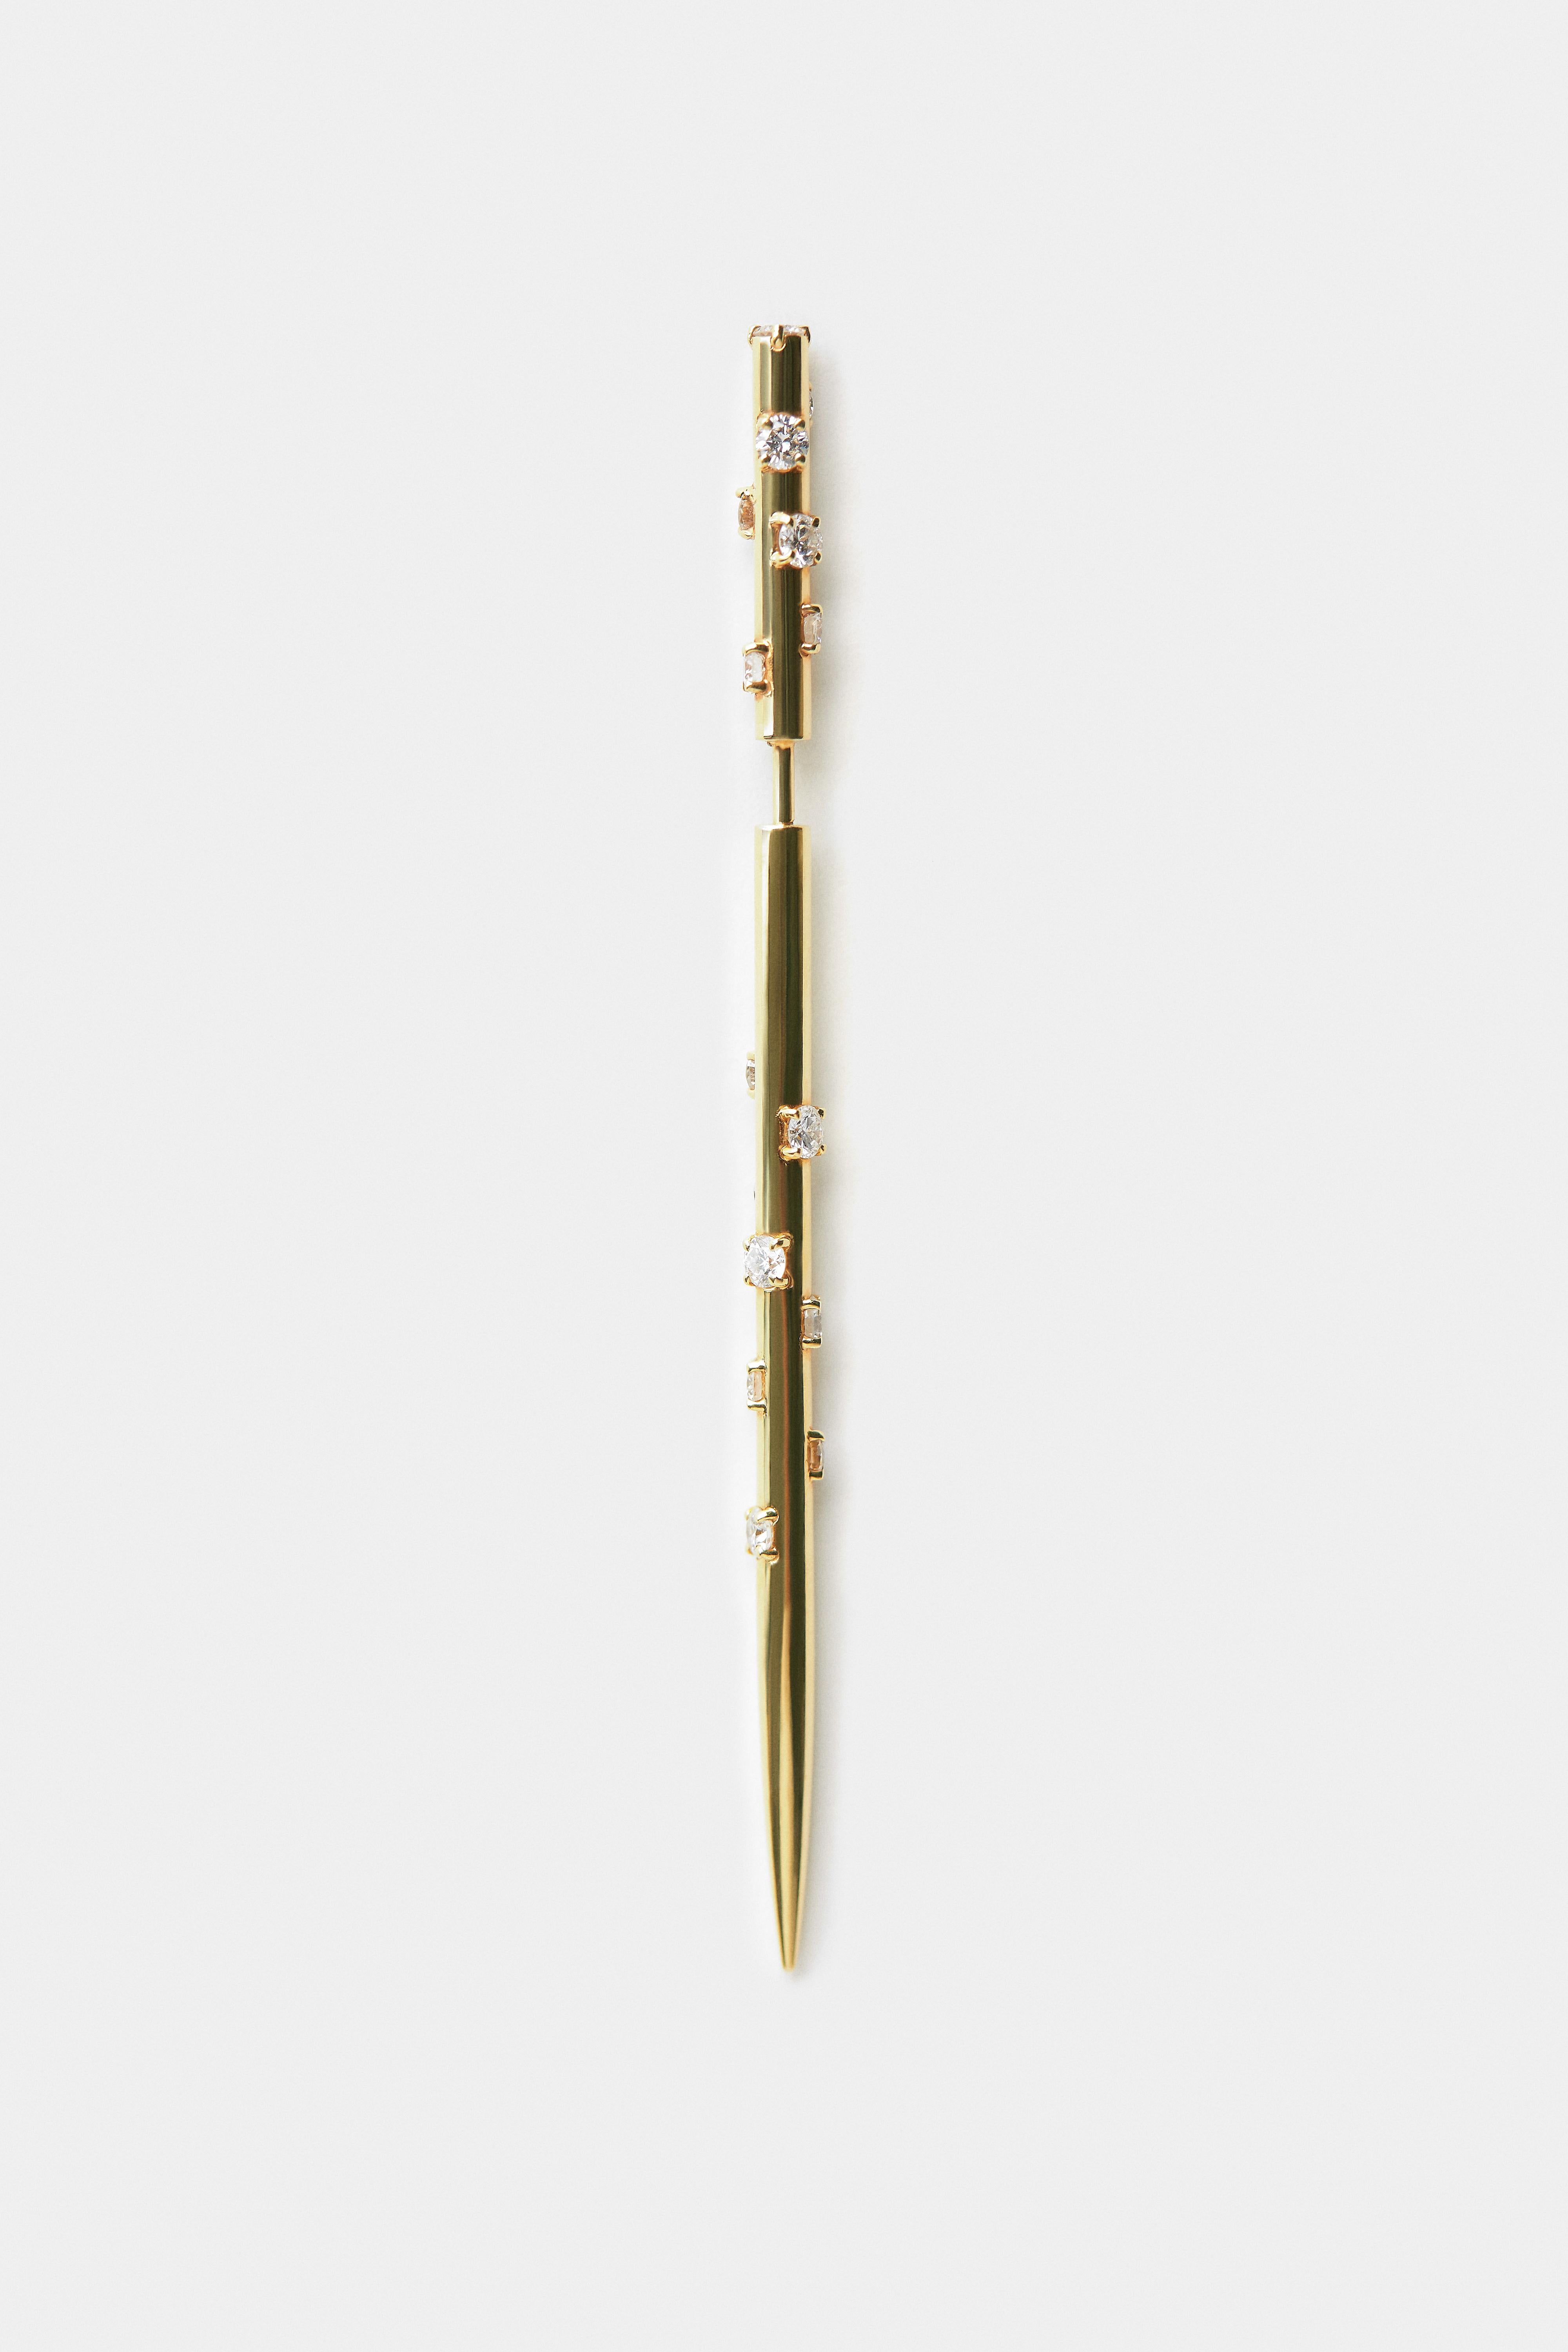 18k yellow gold ear pin with lab diamonds 2,7 mm
stones q-ty: 19
size 8 cm (2 cm + 6 cm)